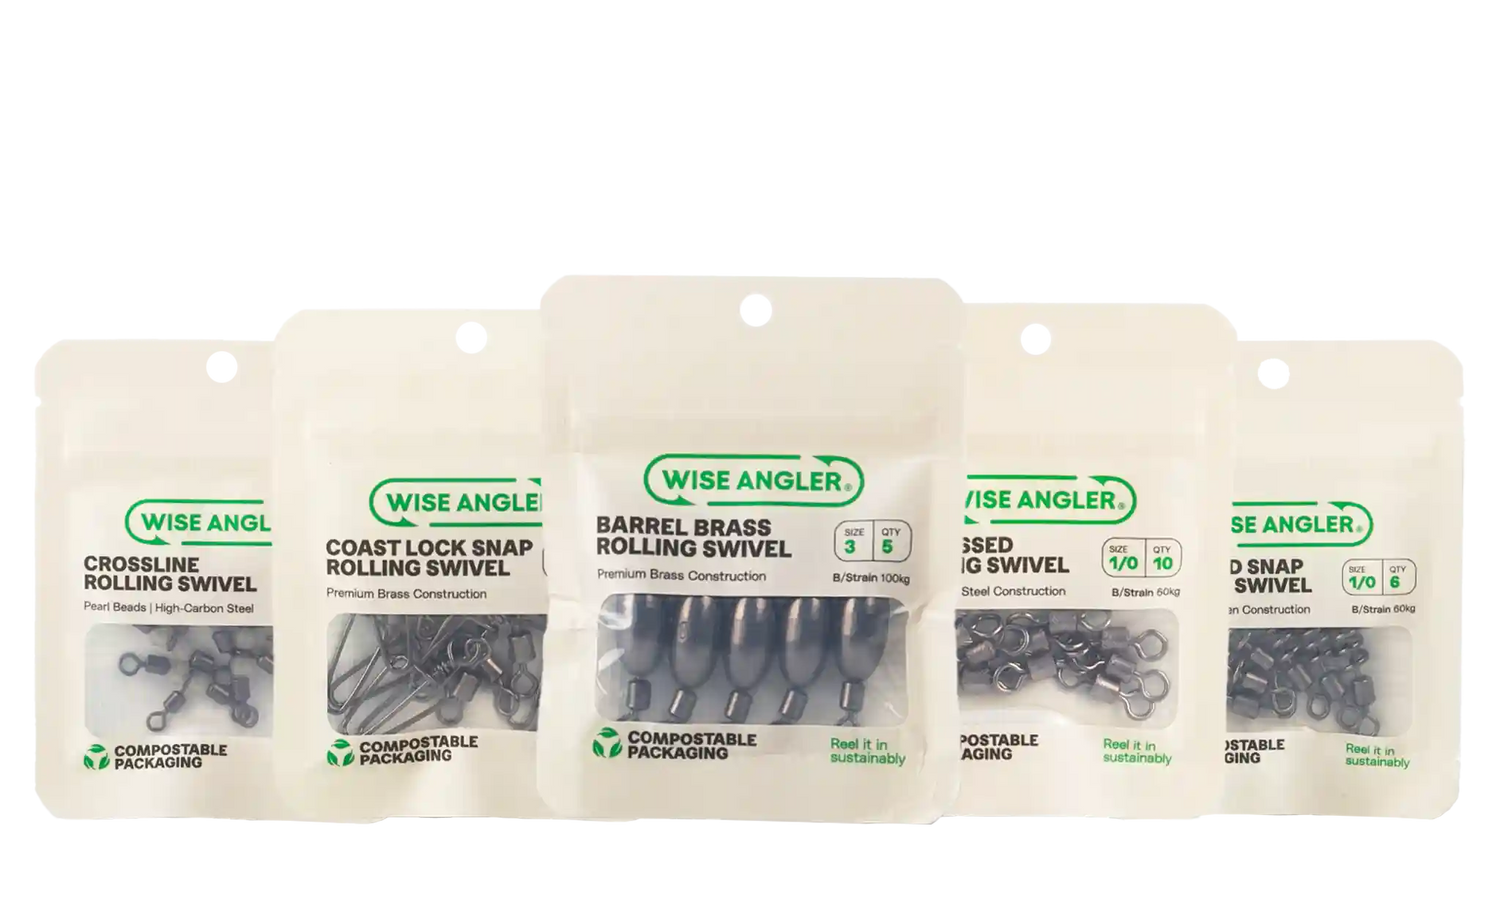 Wise Angler Swivel Range in plastic-free compostable packaging